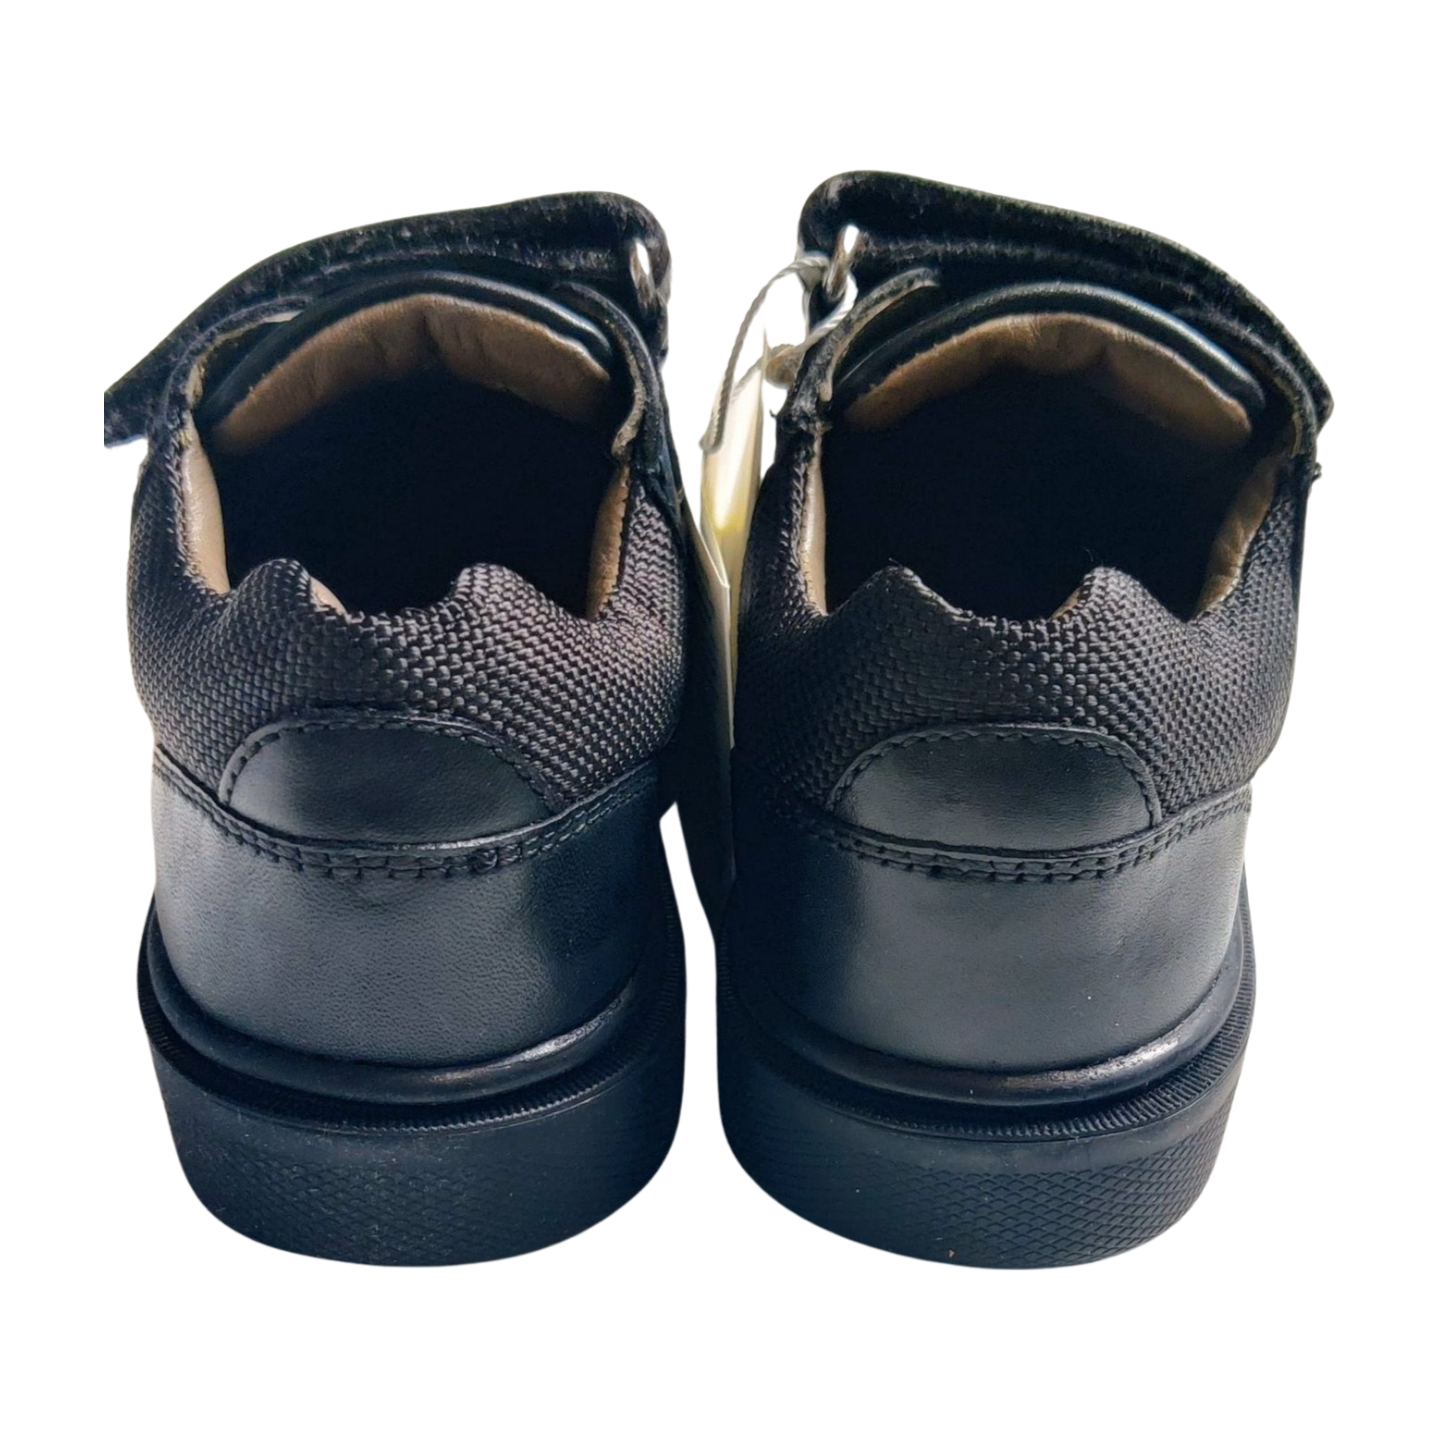 Geox Respira Black Kids Shoes